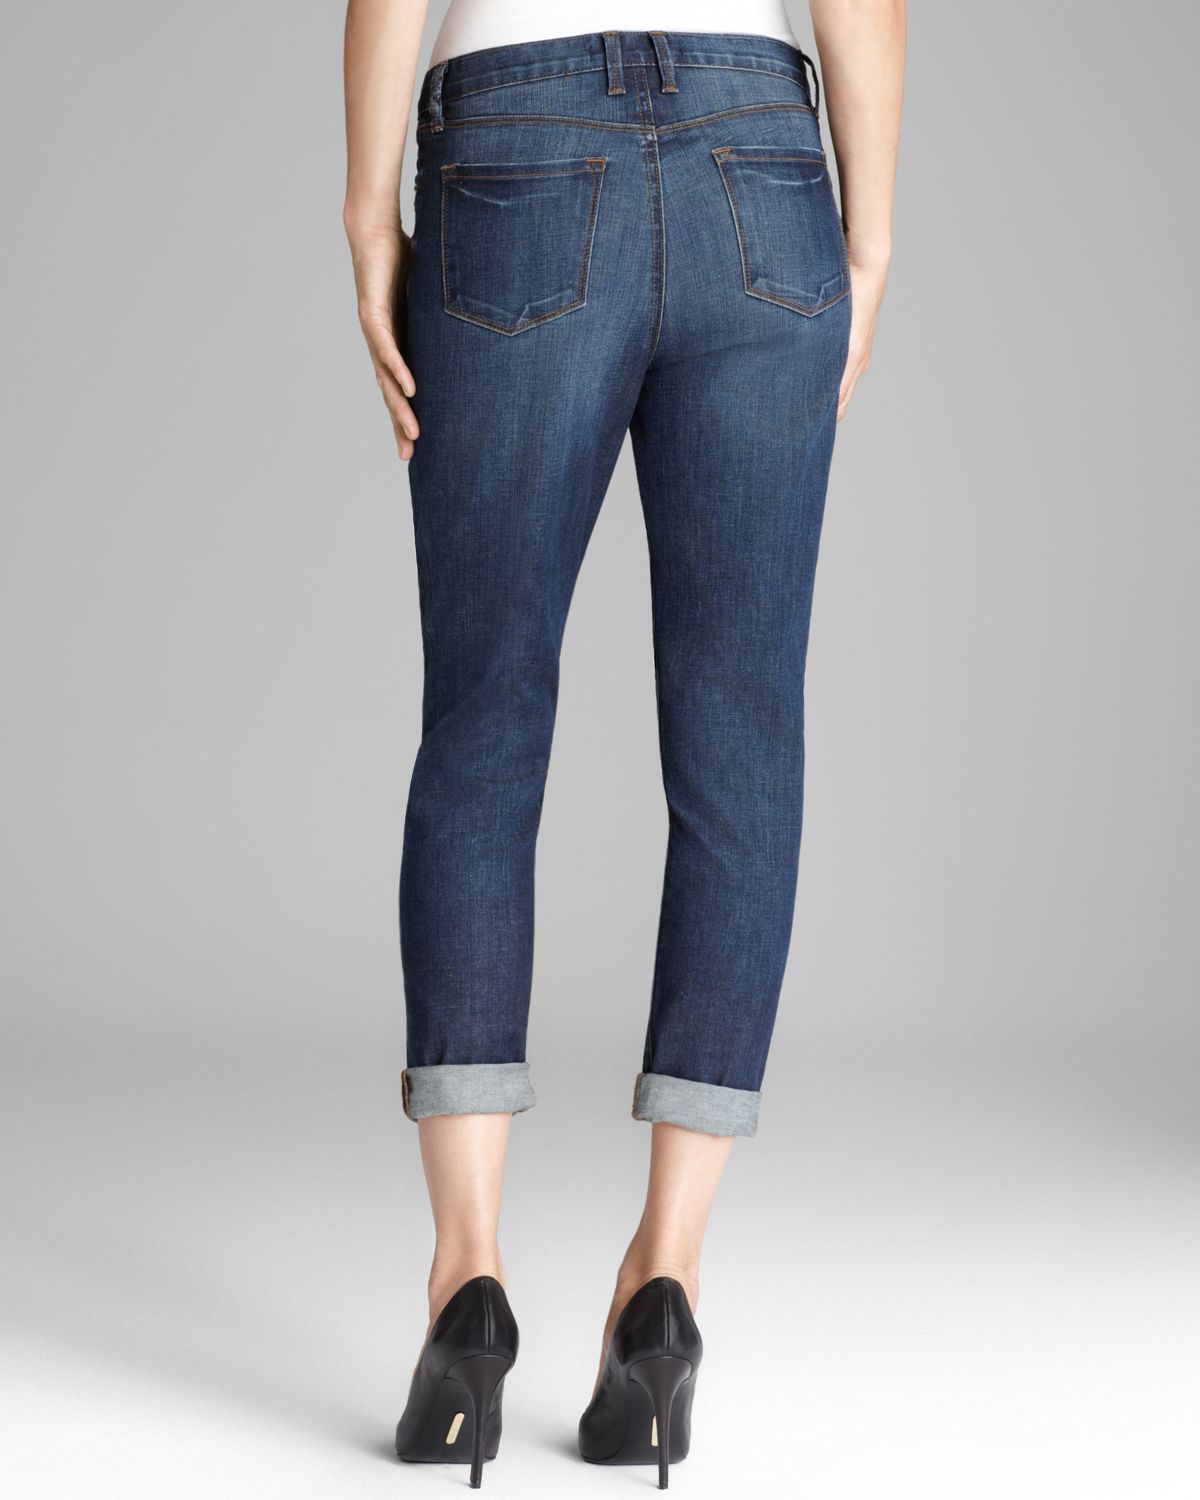 Lyst - J Brand Mid Rise Skinny Slouch Jean in Blue